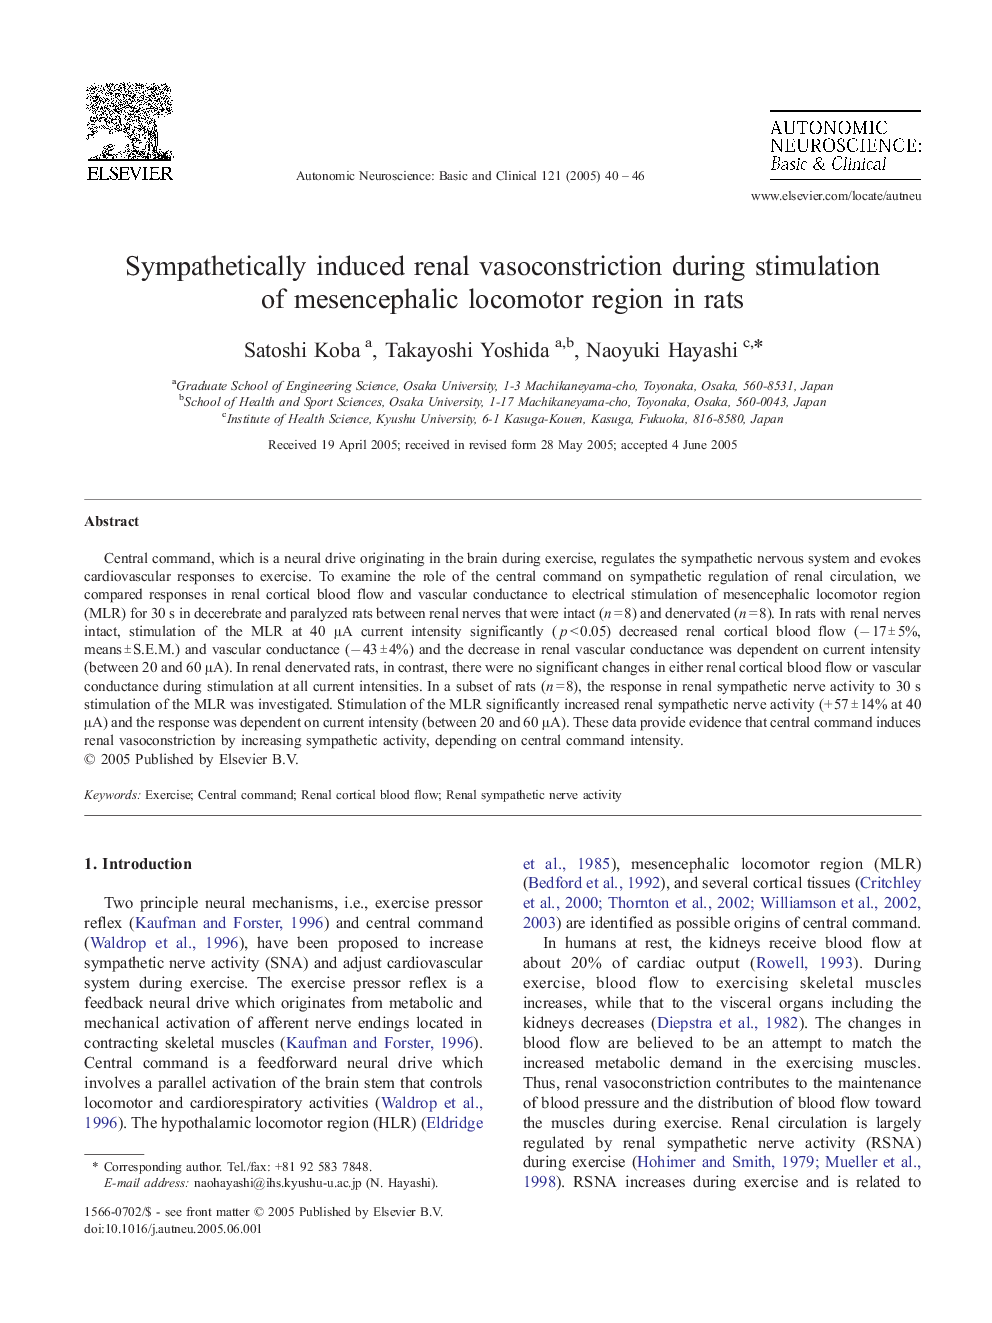 Sympathetically induced renal vasoconstriction during stimulation of mesencephalic locomotor region in rats